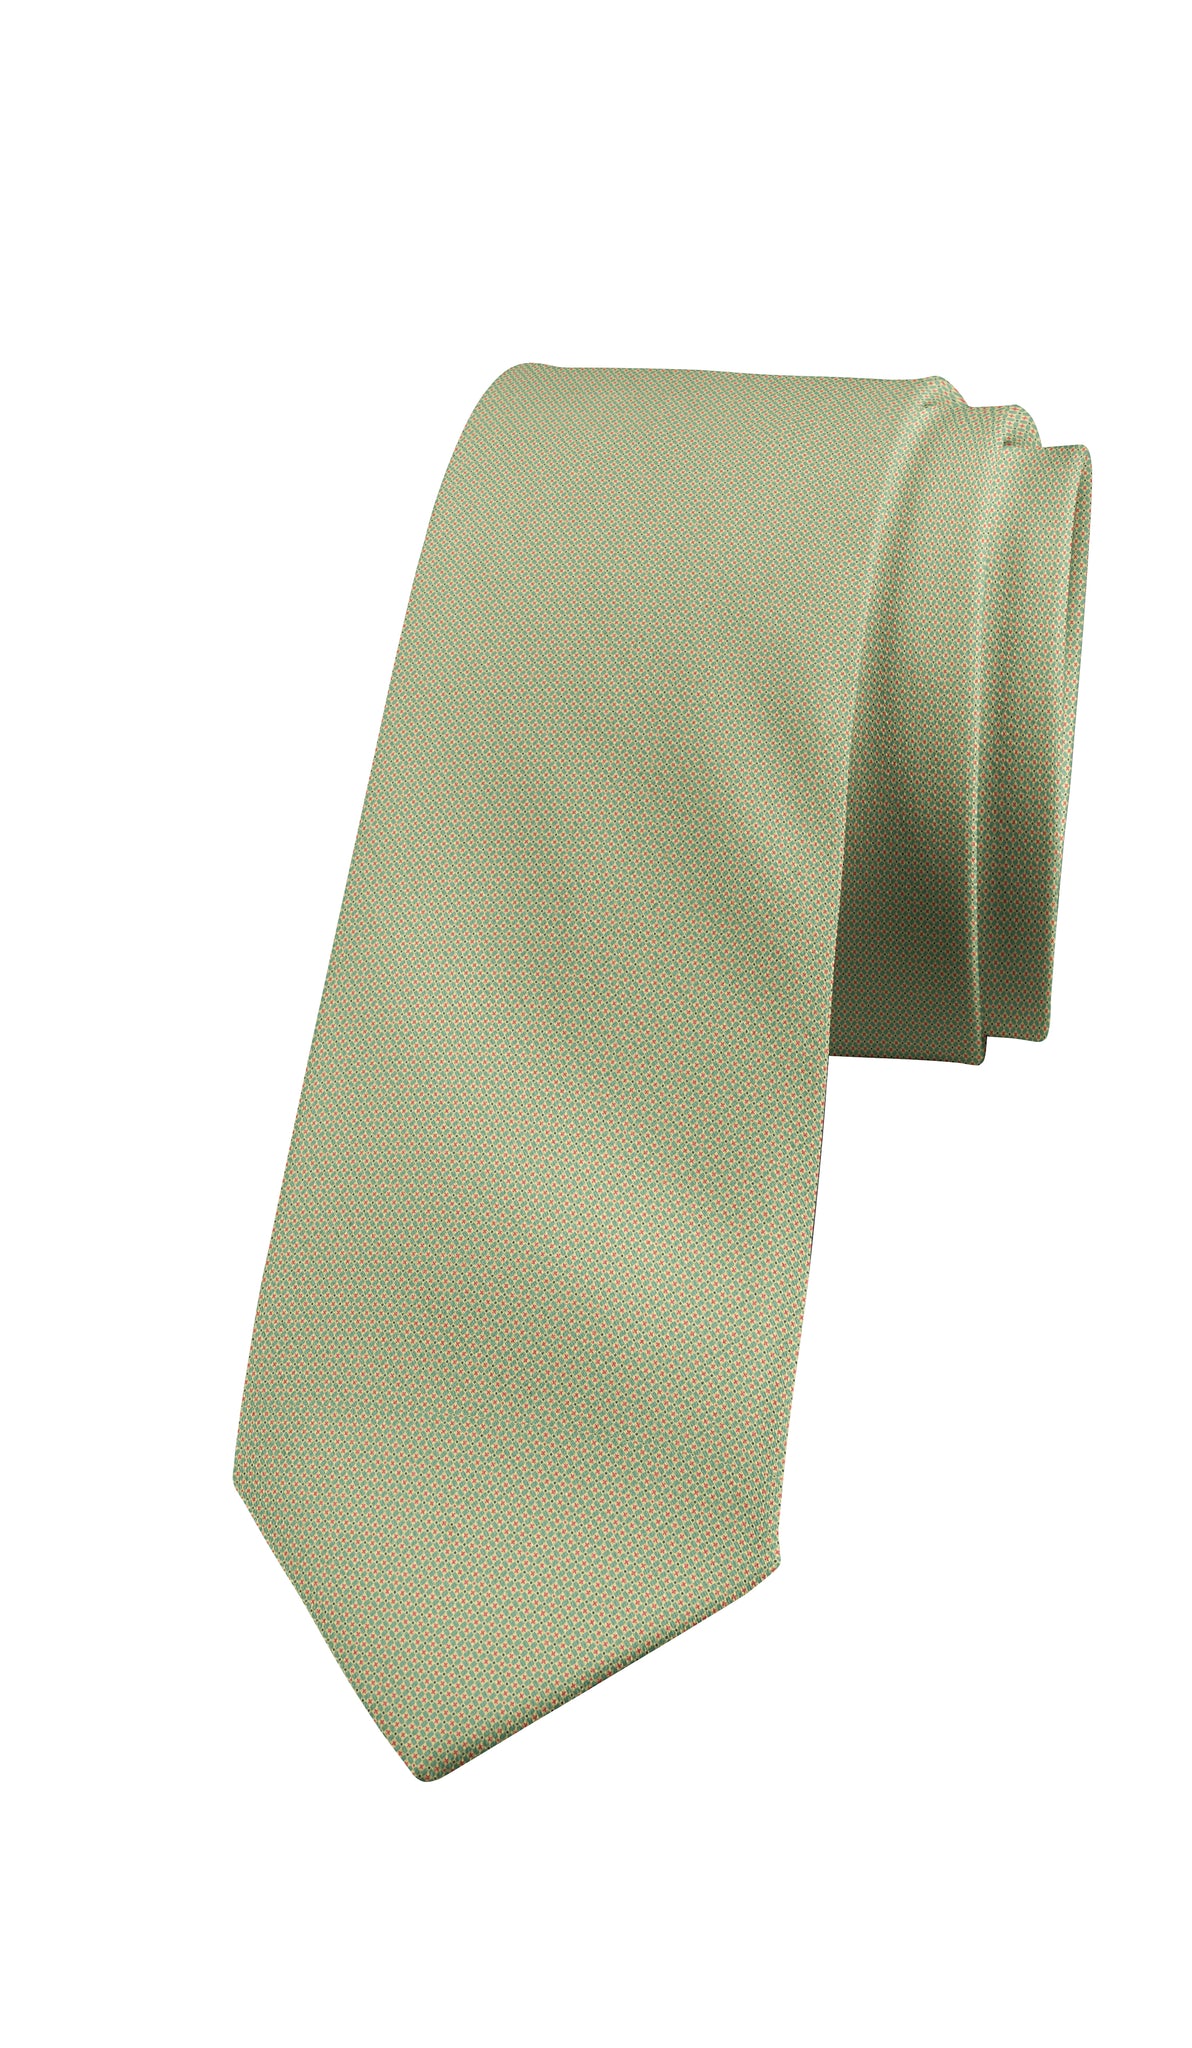 Priego - Slim Cotton Tie